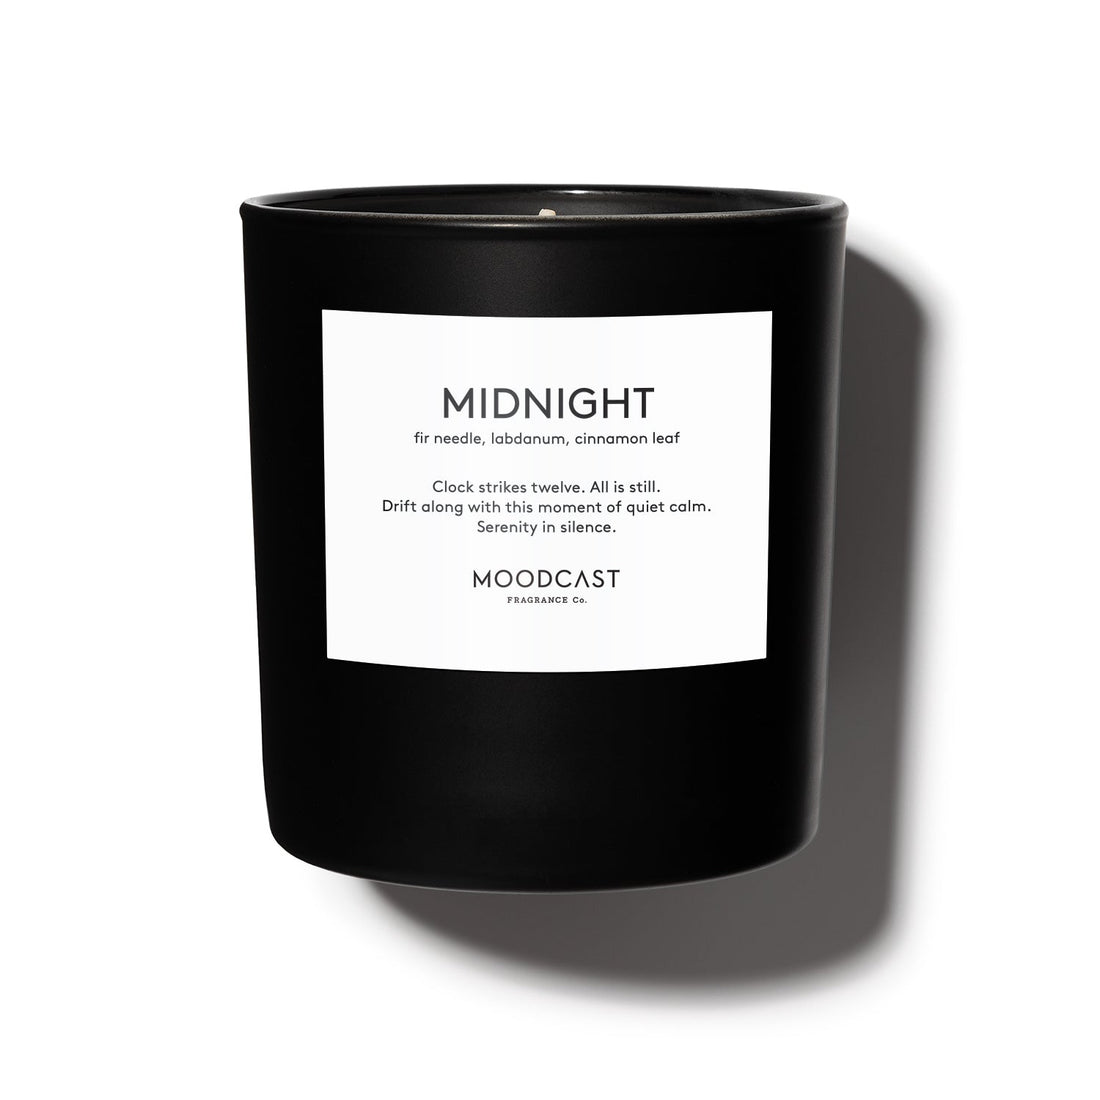 Midnight - Night & Day Collection (Black & White) - 8oz/227g Coconut Wax Blend Glass Jar Candle - Key Notes: Fir Needle, Labdanum, Cinnamon Leaf